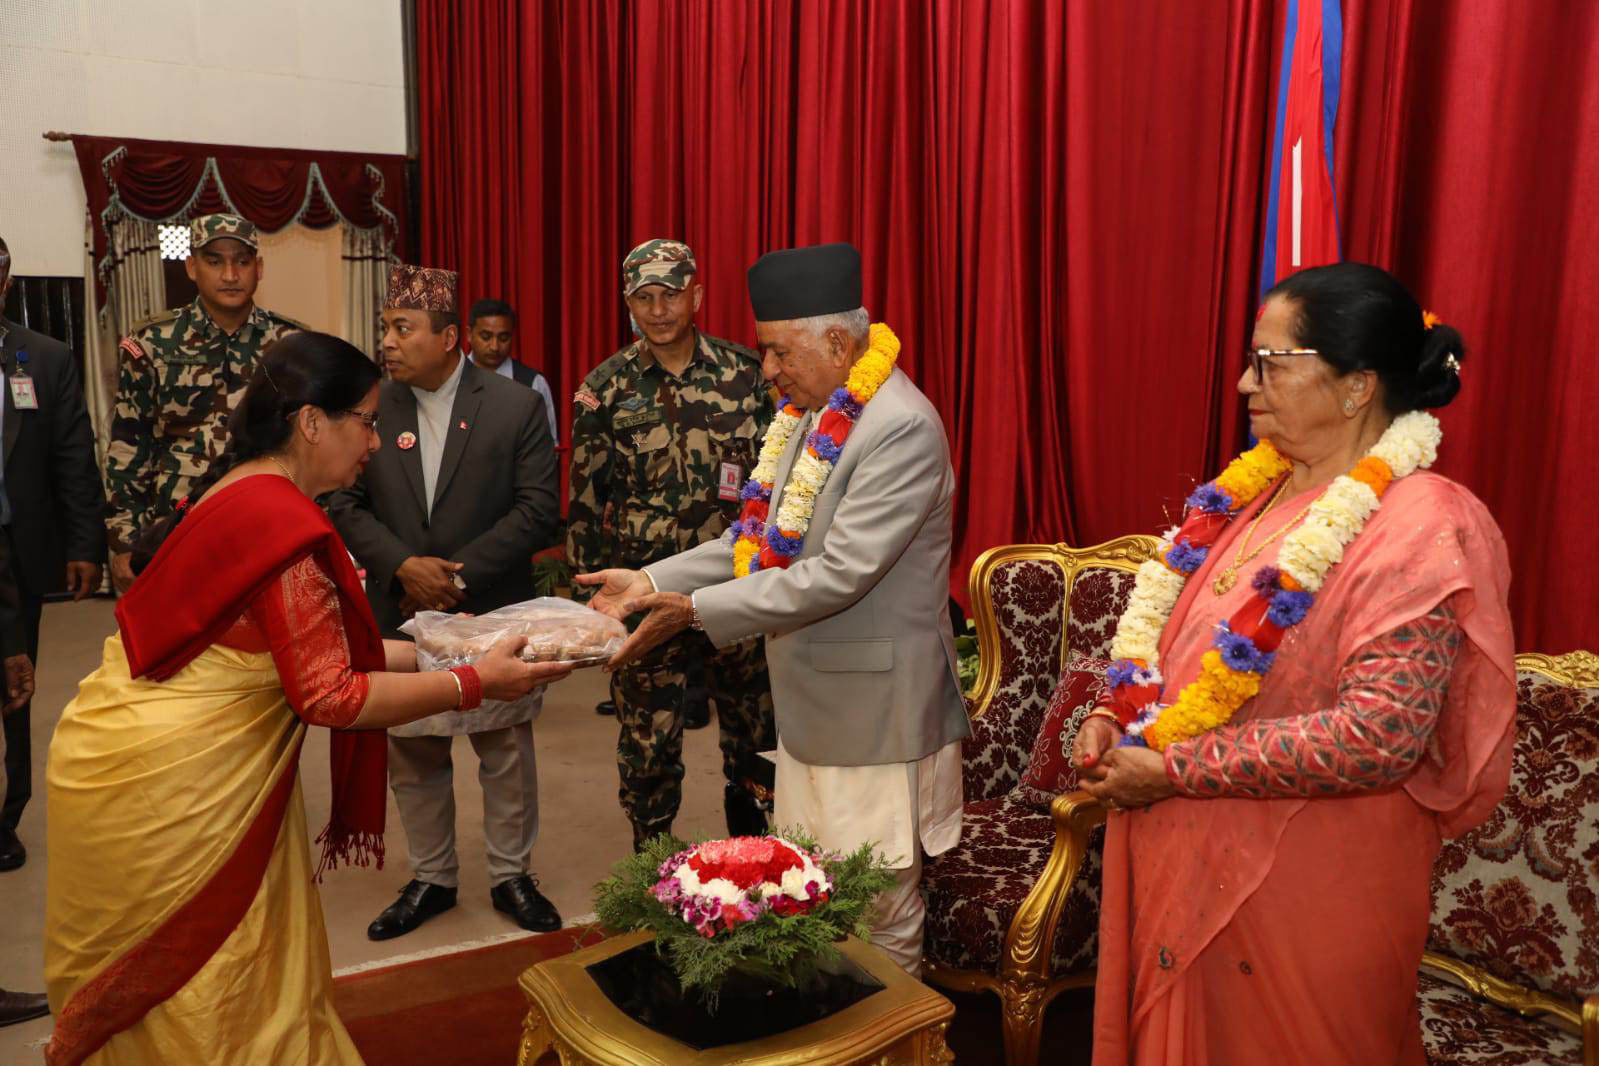 Kumari Ghar congratulates President Poudel